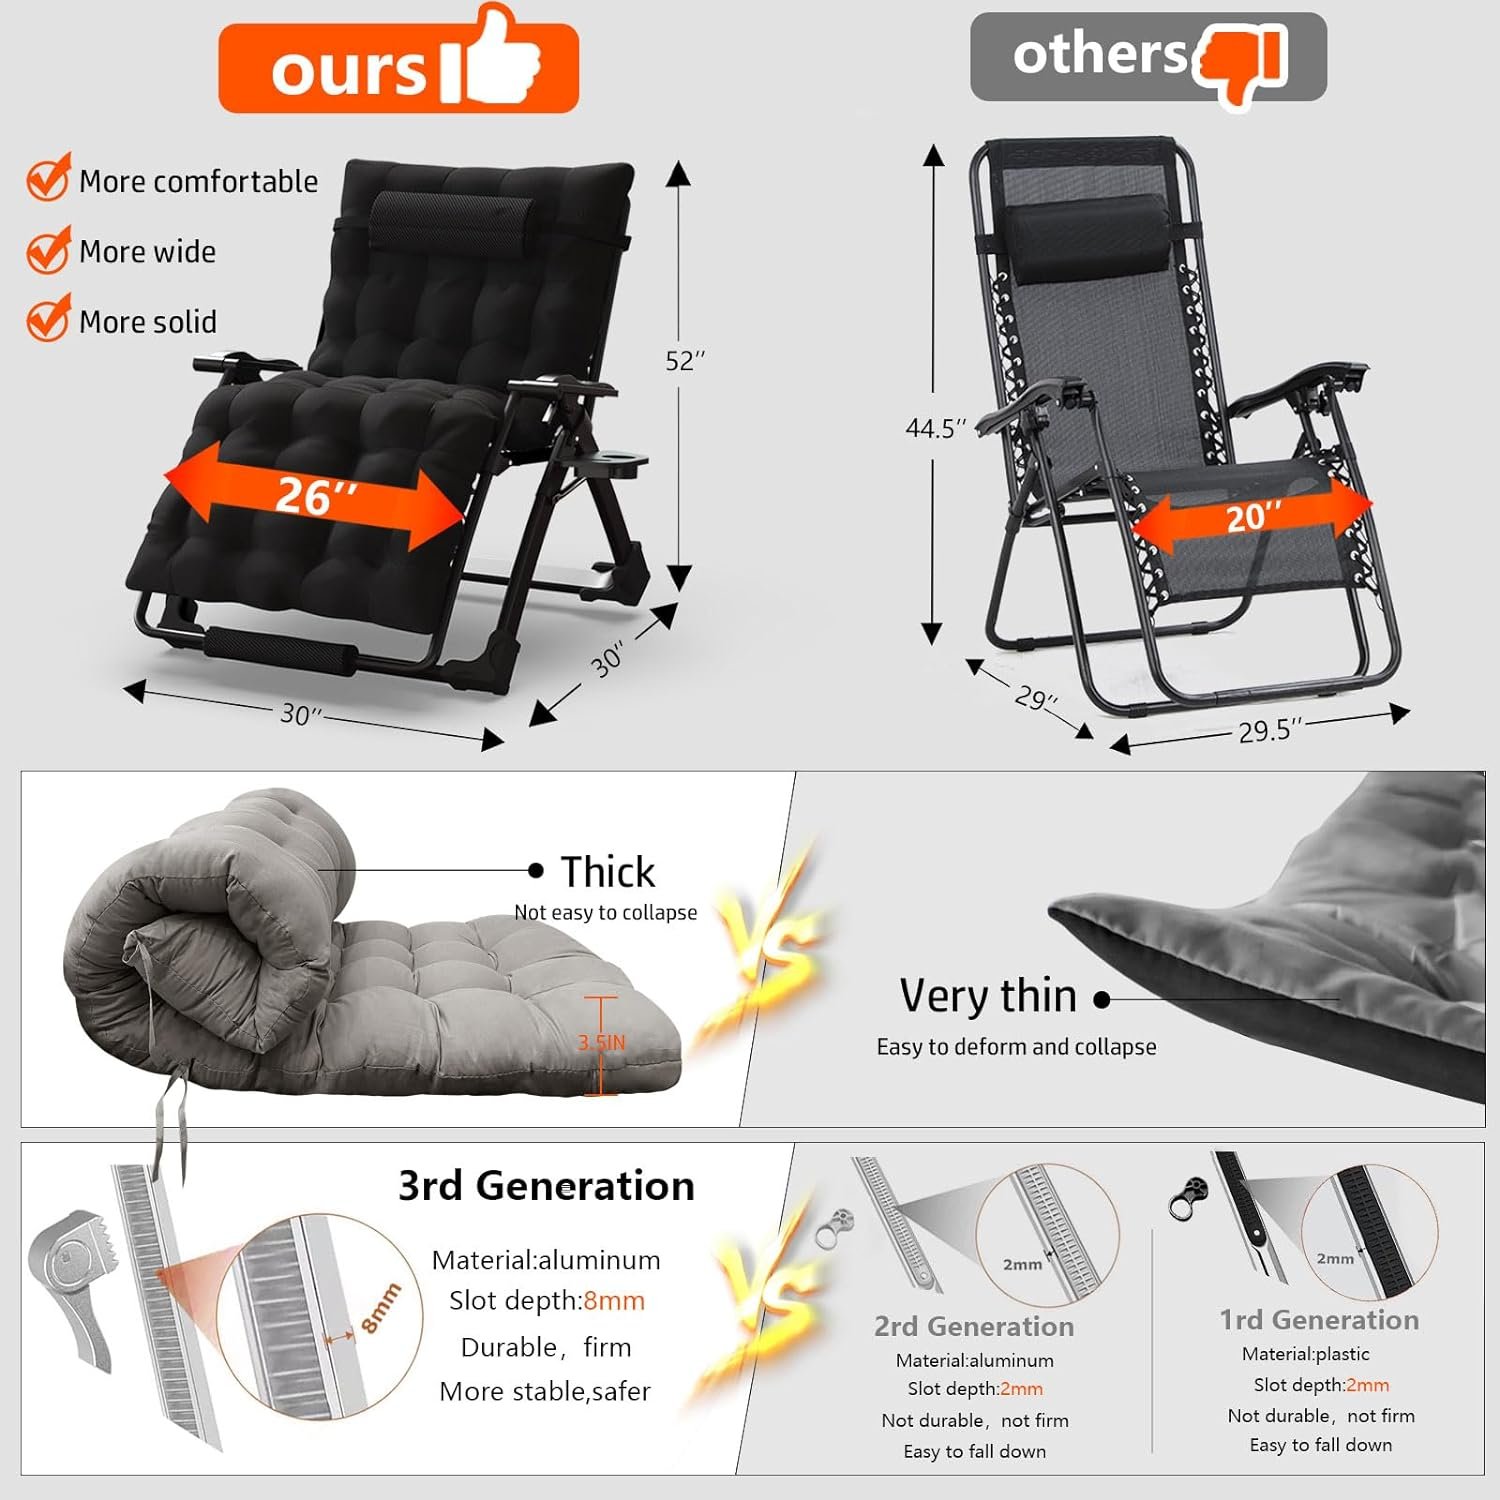 Soliles Oversized XXL Zero Gravity Chair Review